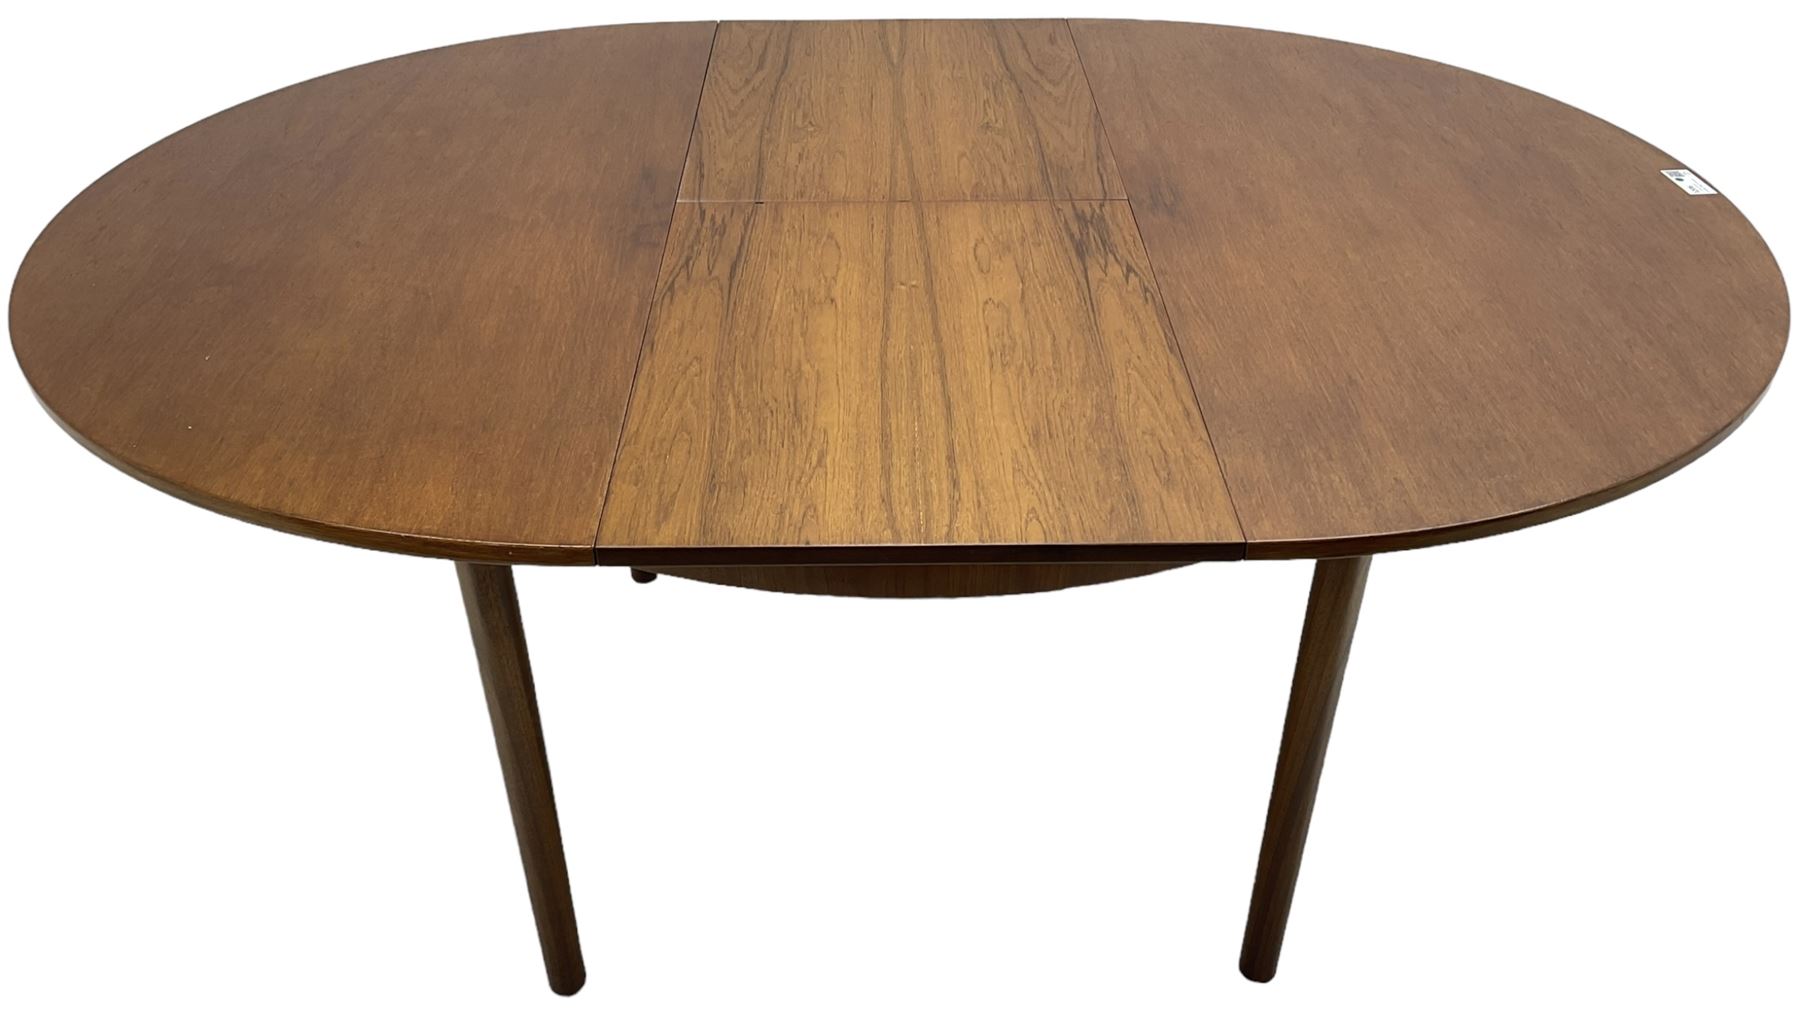 McIntosh - mid-20th century teak extending dining table - Image 3 of 7